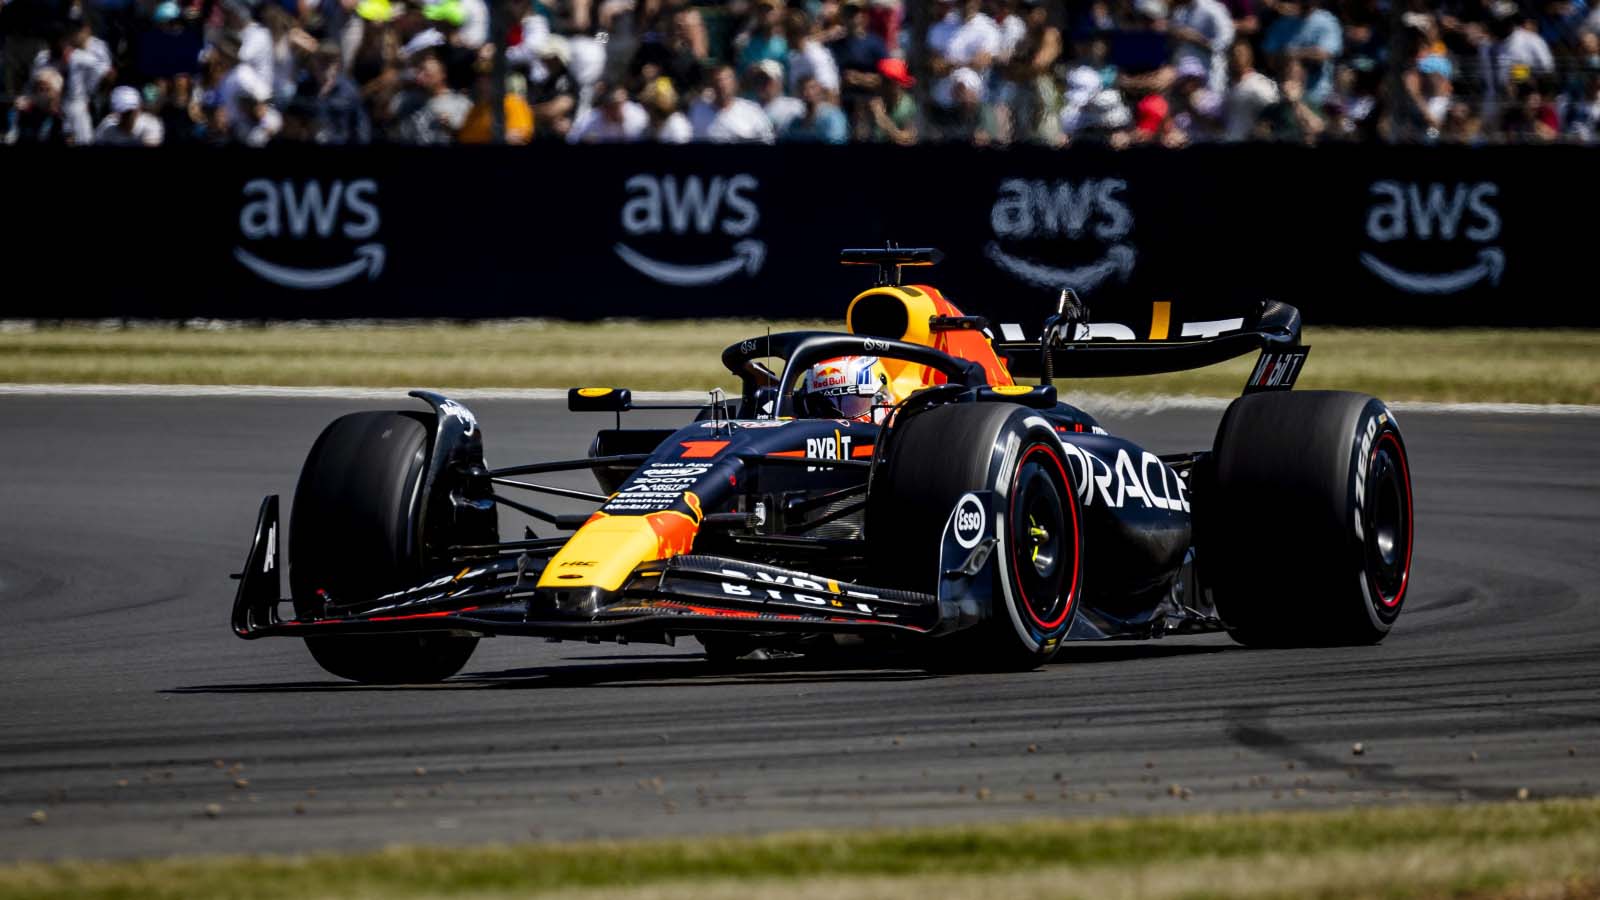 British Grand Prix Max Verstappen pips Carlos Sainz in FP2, Williams